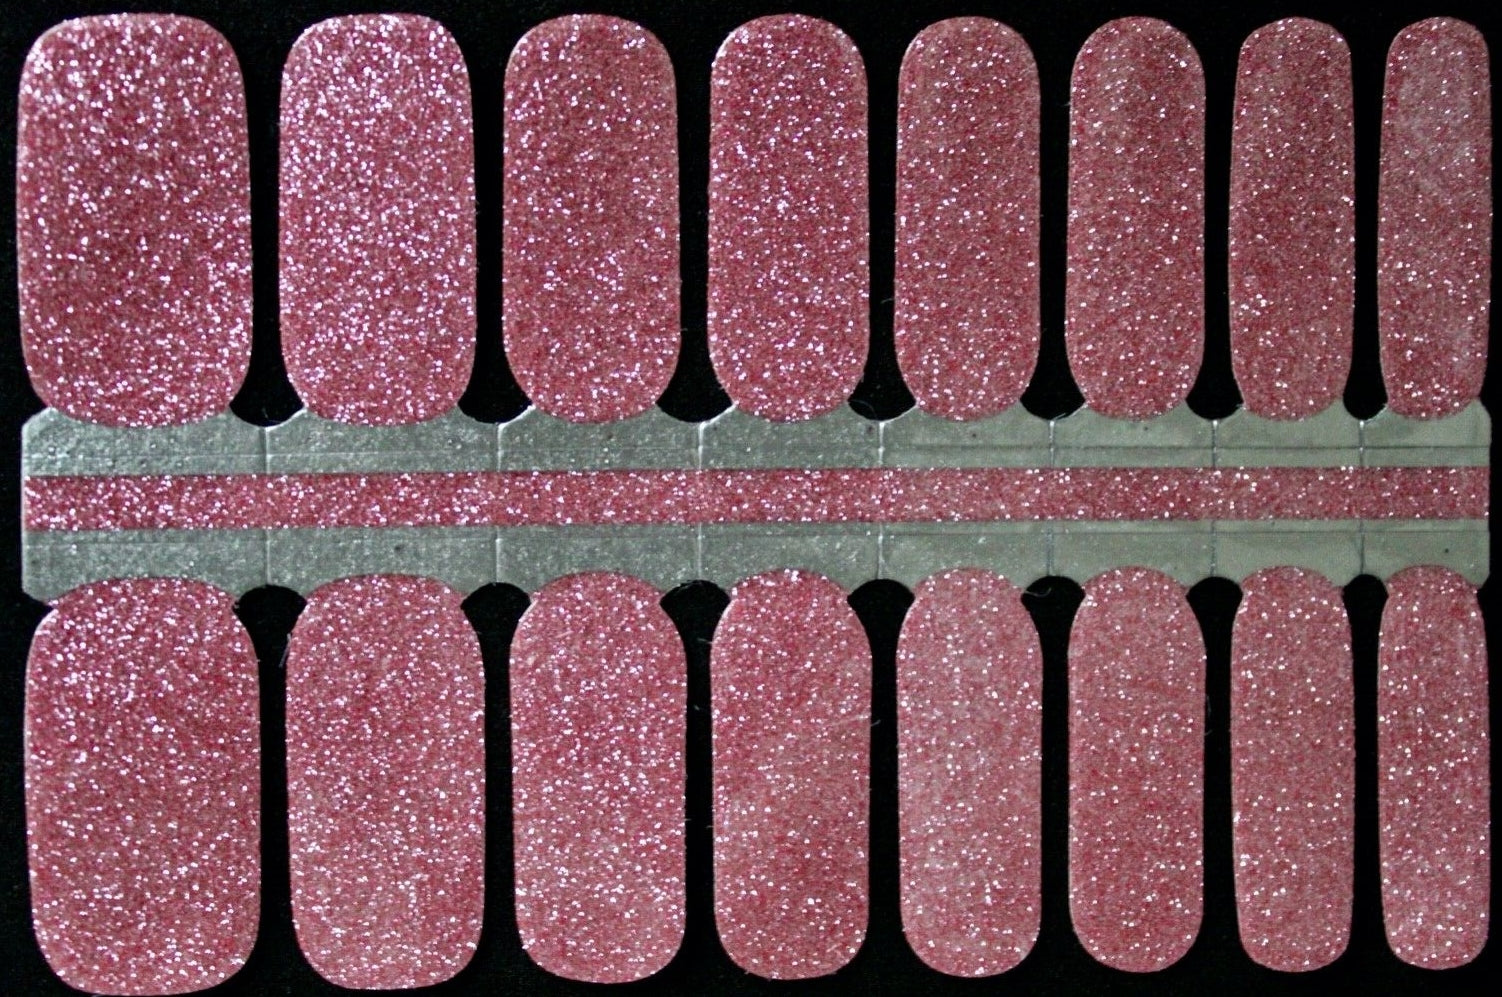 Pink glitter manicure nail polish lacquer strips